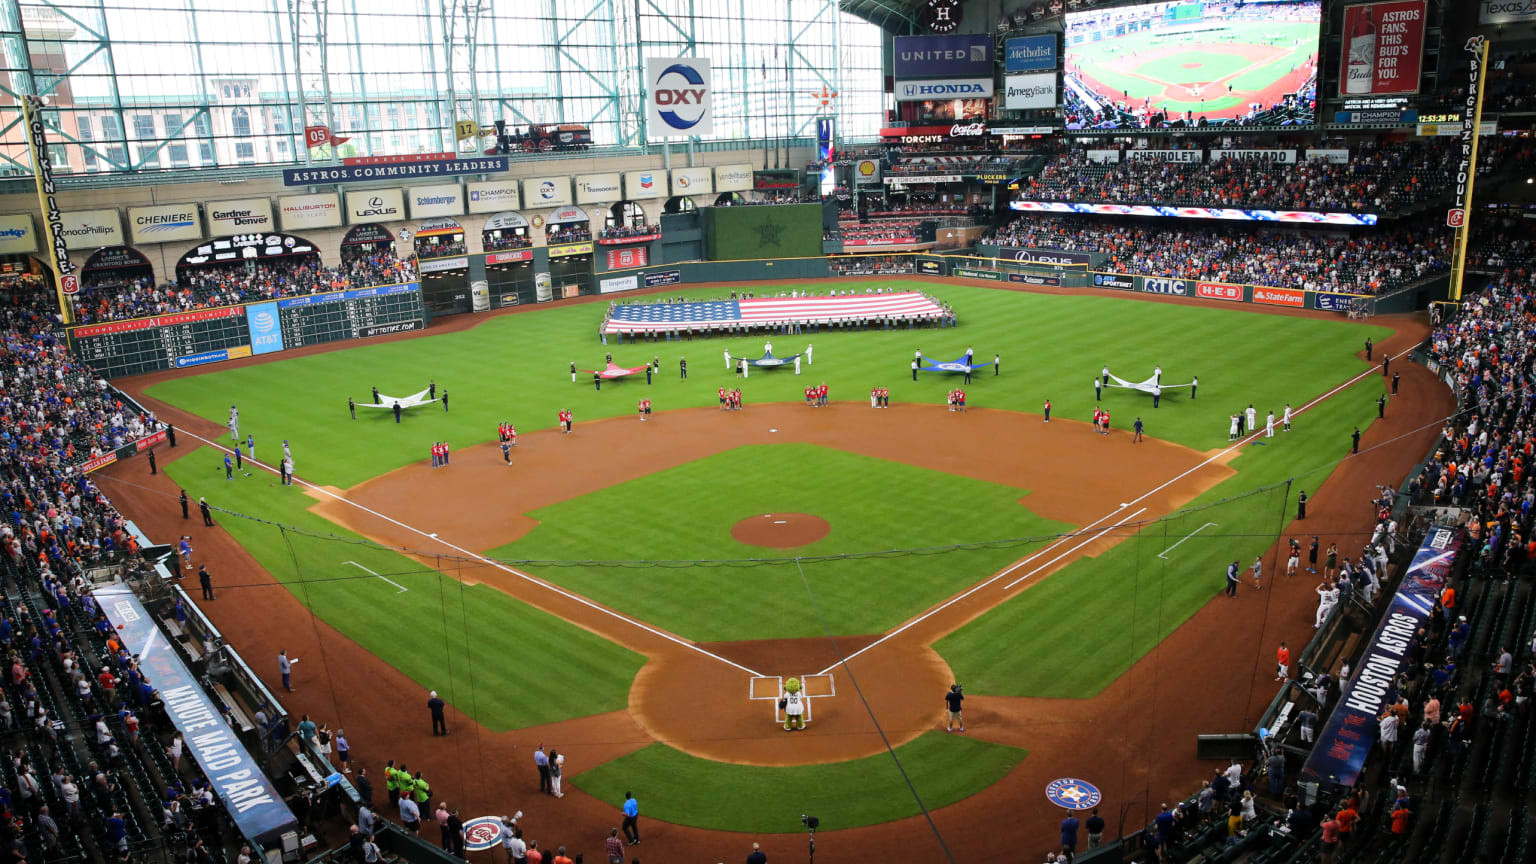 Houston Astros - In observance of Memorial Day, the Houston Astros